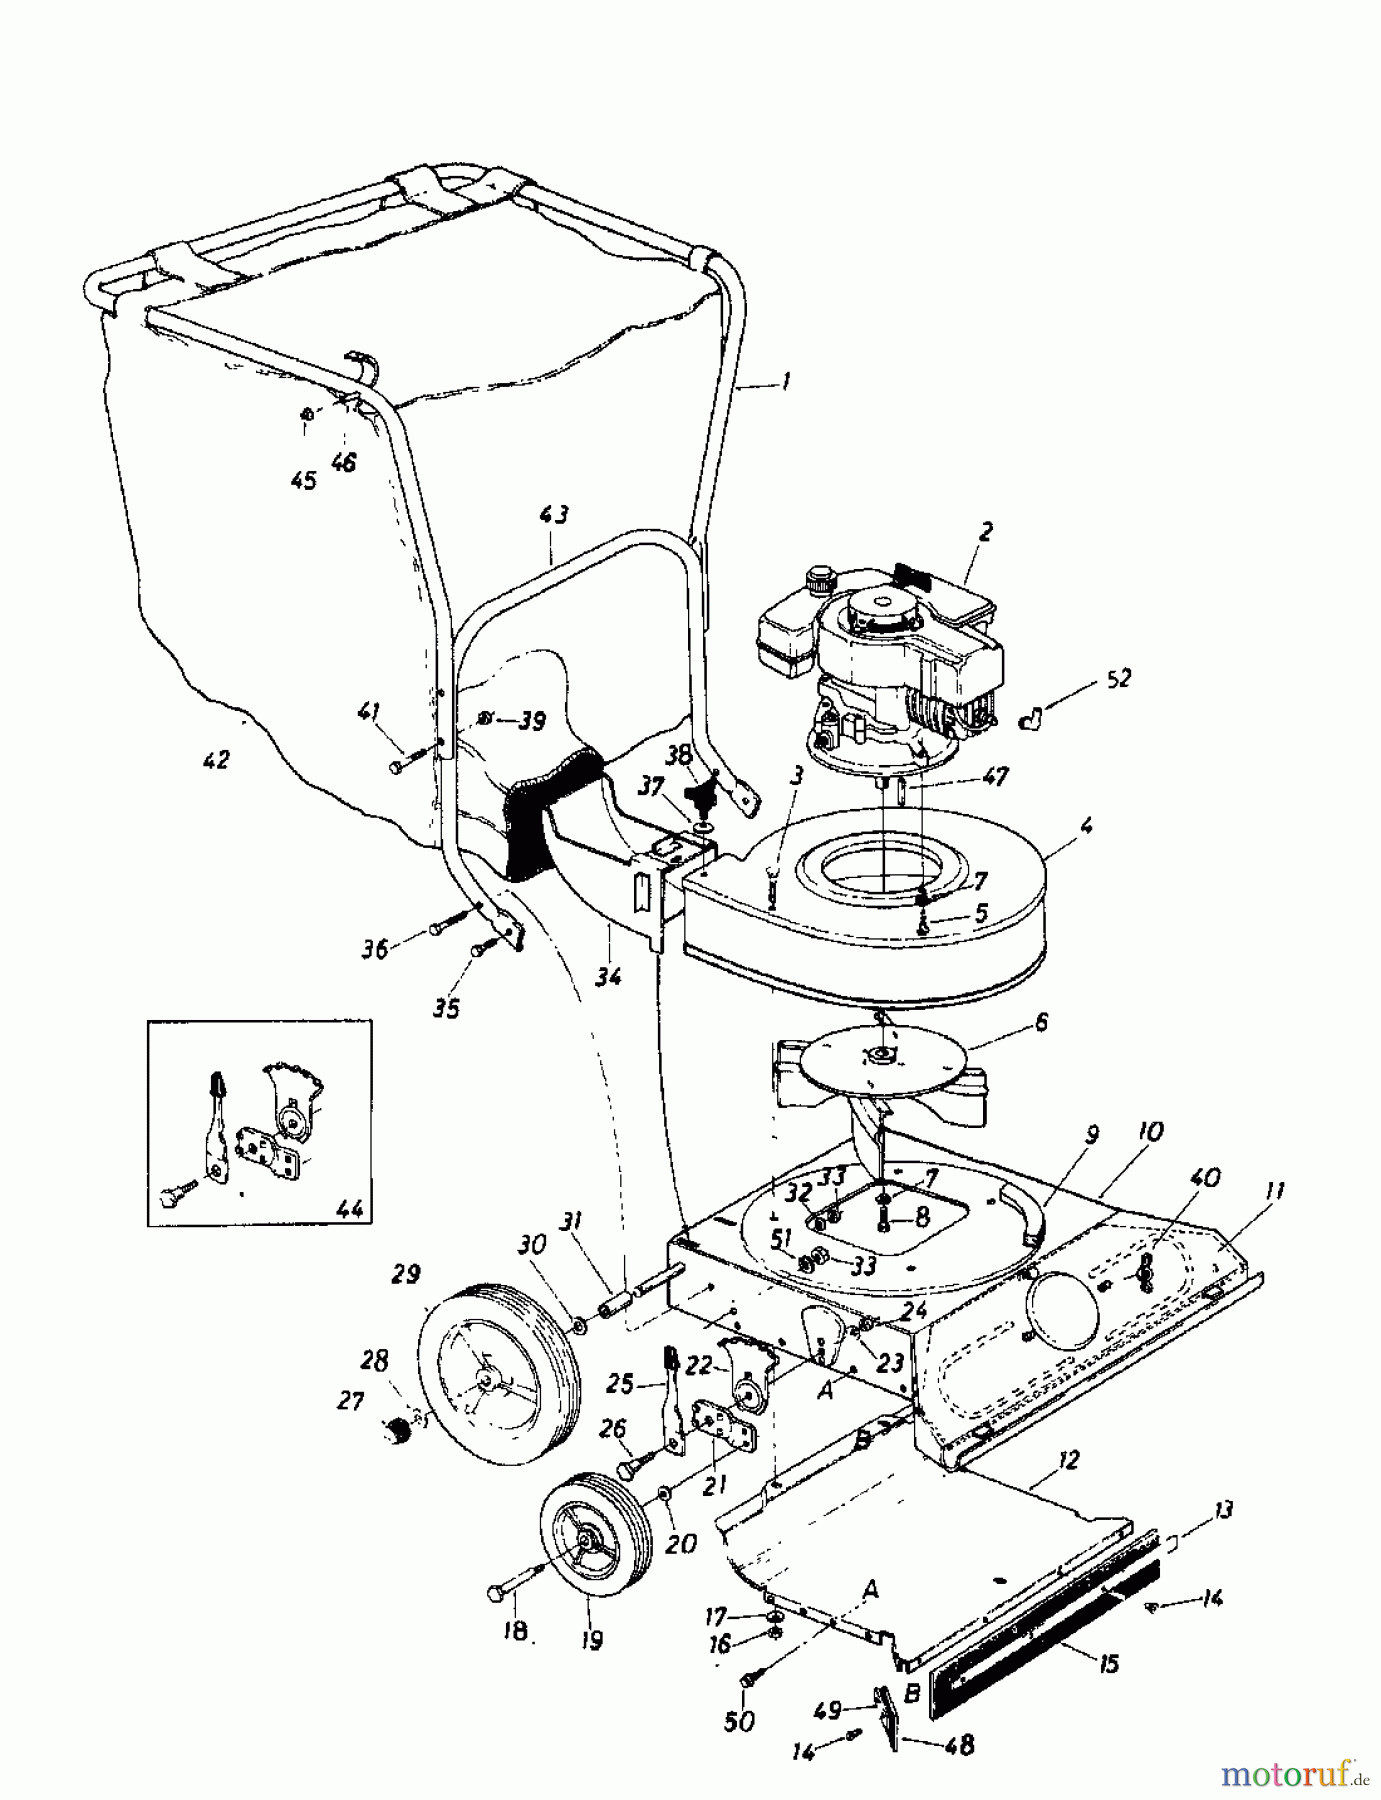  MTD Souffleur de feuille, Aspirateur de feuille Air-Vac 660 249-6600  (1989) Machine de base